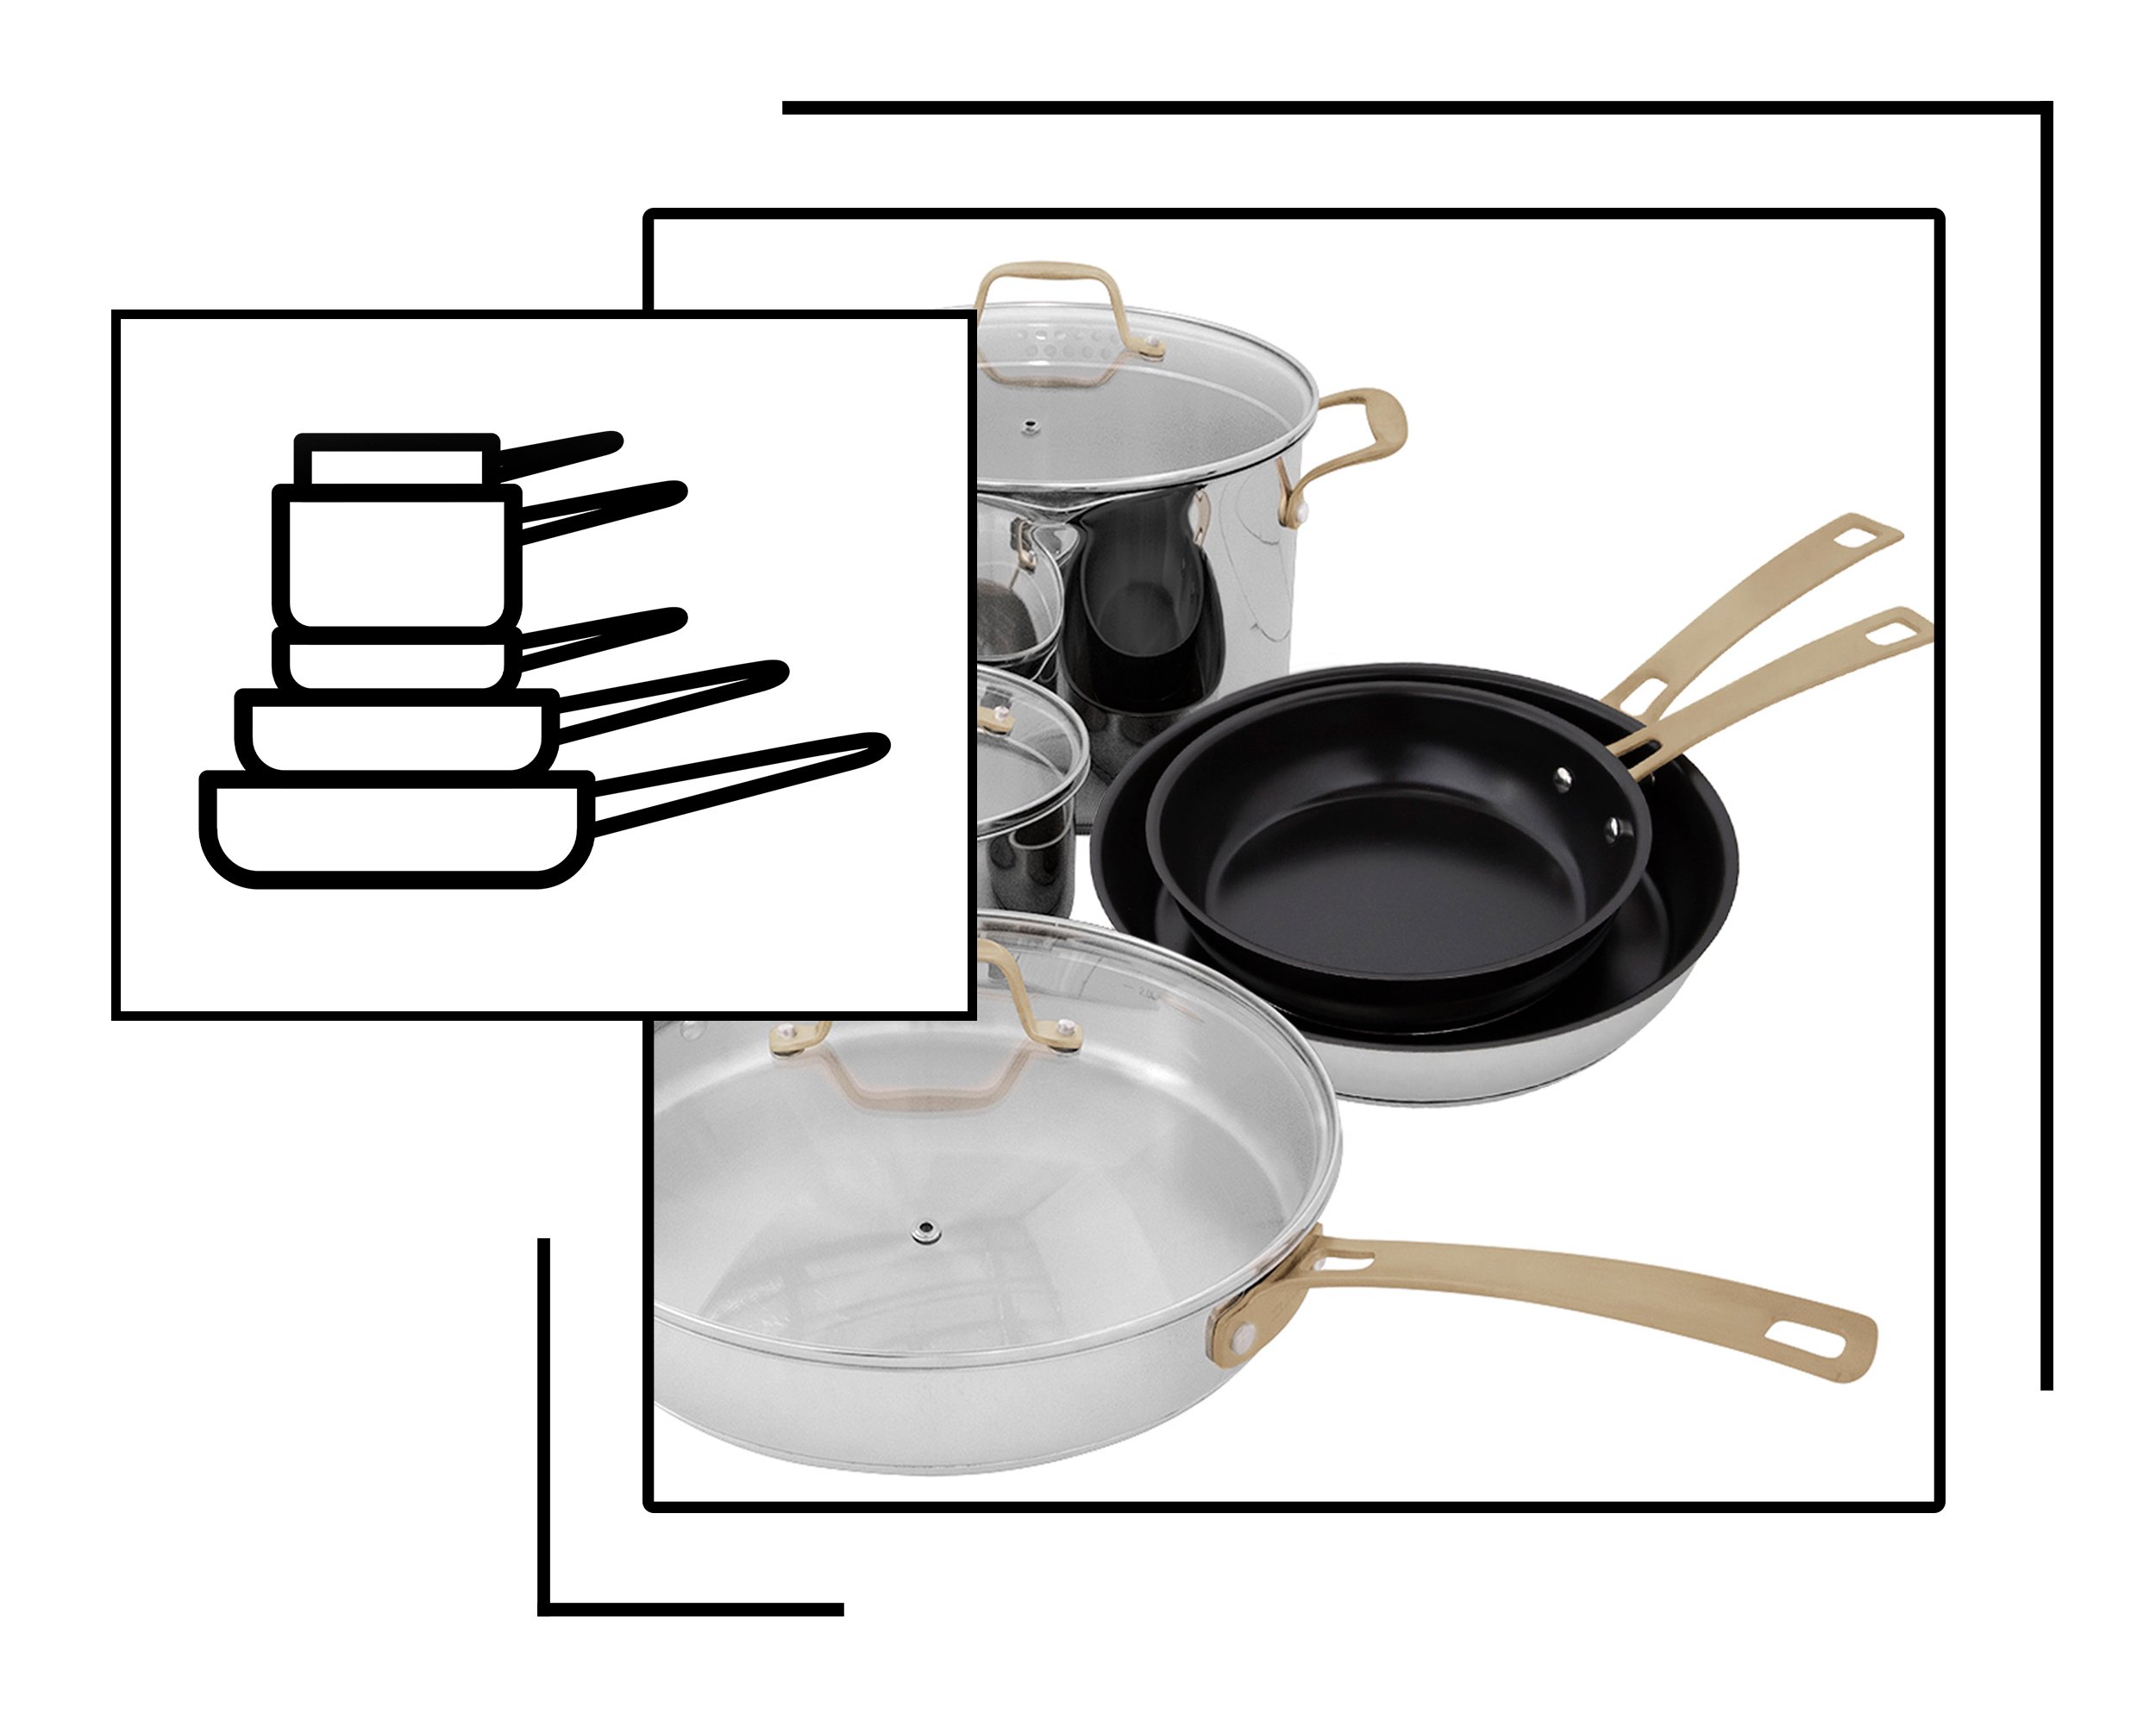 ZLINE 10-Piece Stainless Steel Non-Toxic Cookware Set - ZLINE